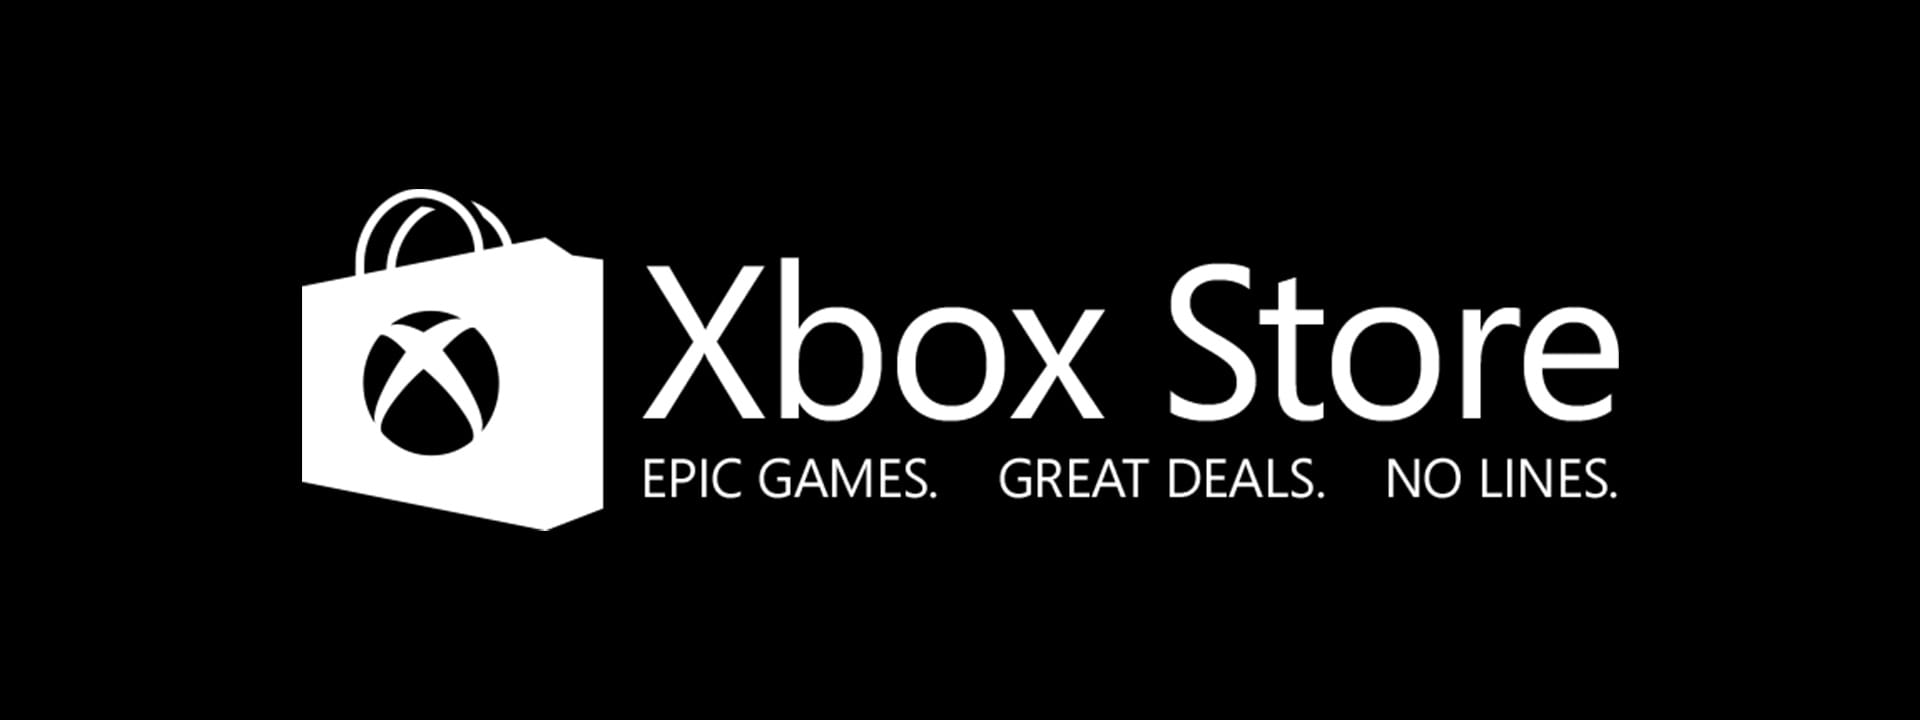 Xbox One Store